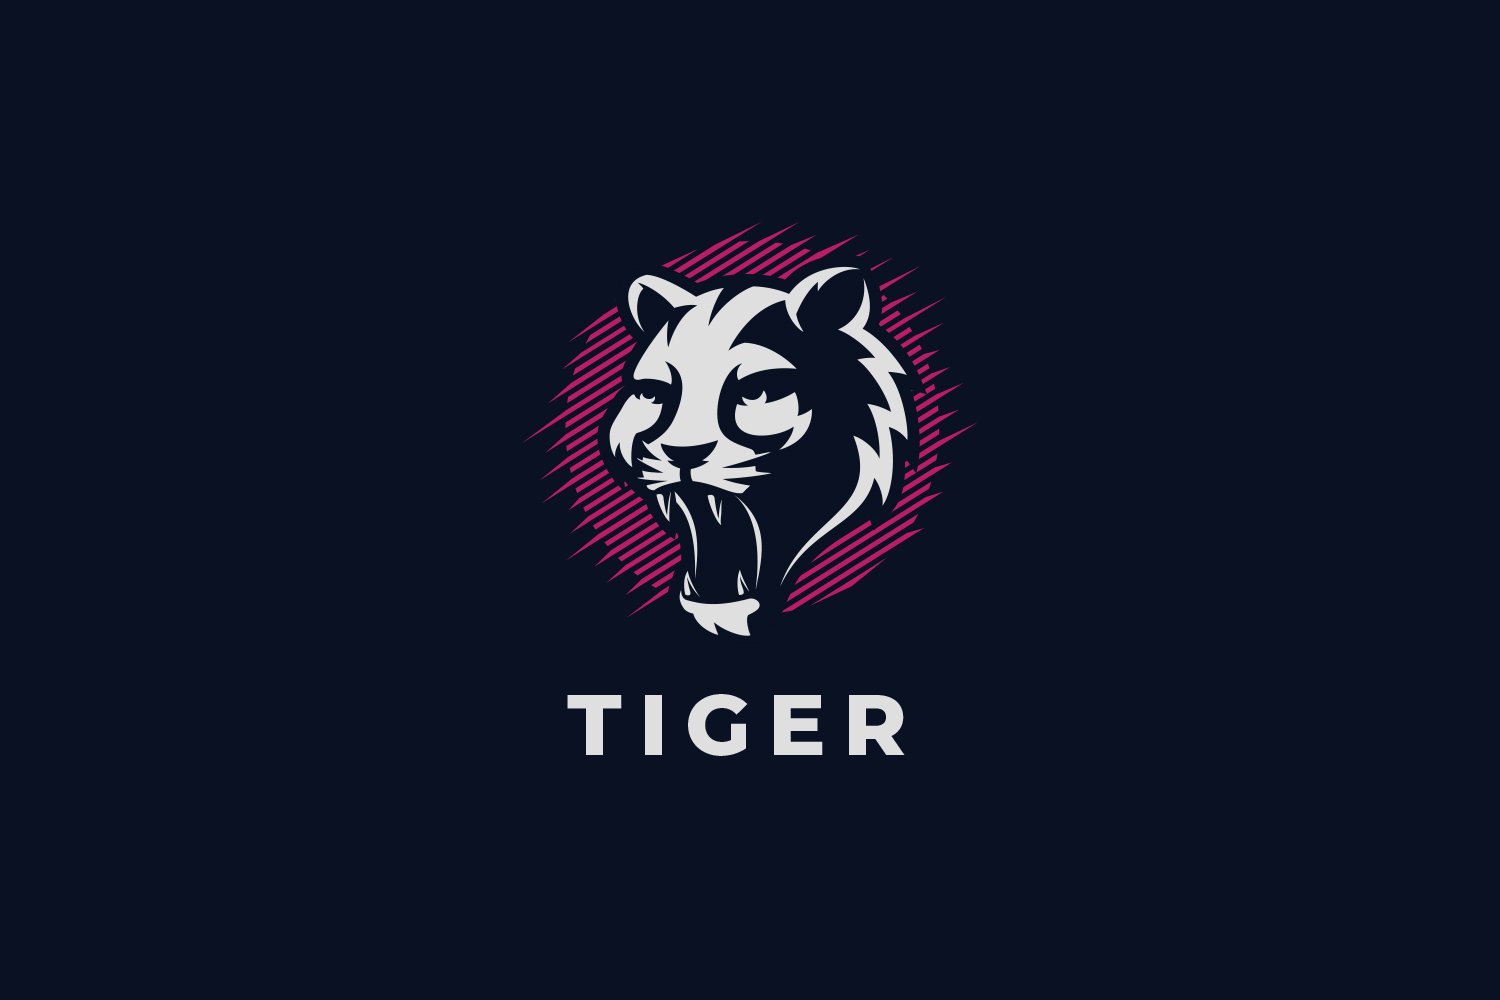 Tiger Head Logo Design cover image.